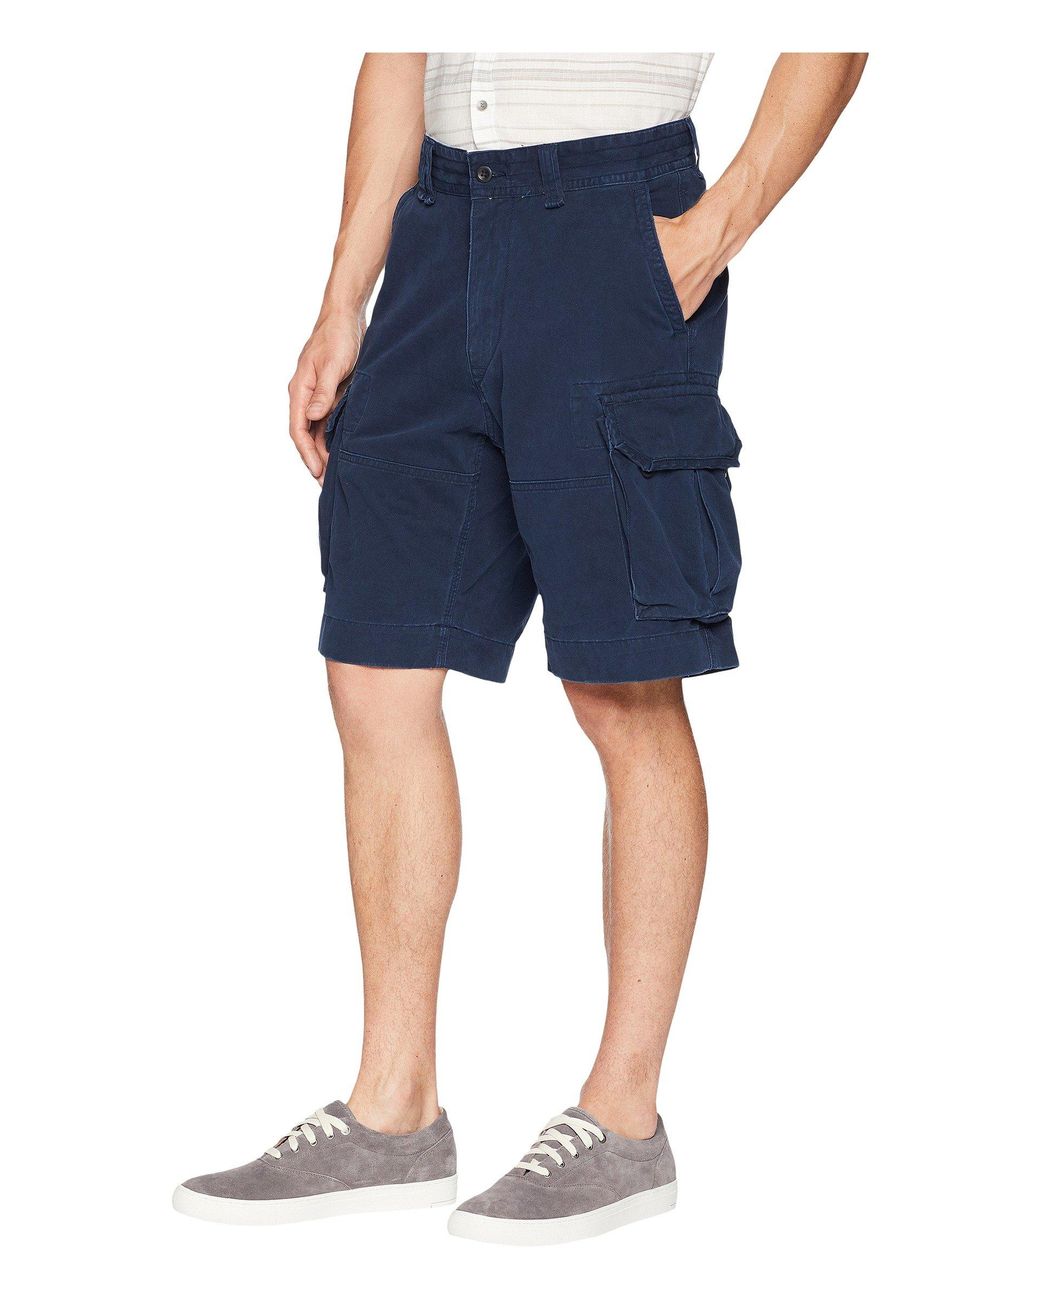 Polo Ralph Lauren Cotton Classic Fit Gellar Cargo Shorts in Navy (Blue) for  Men - Lyst